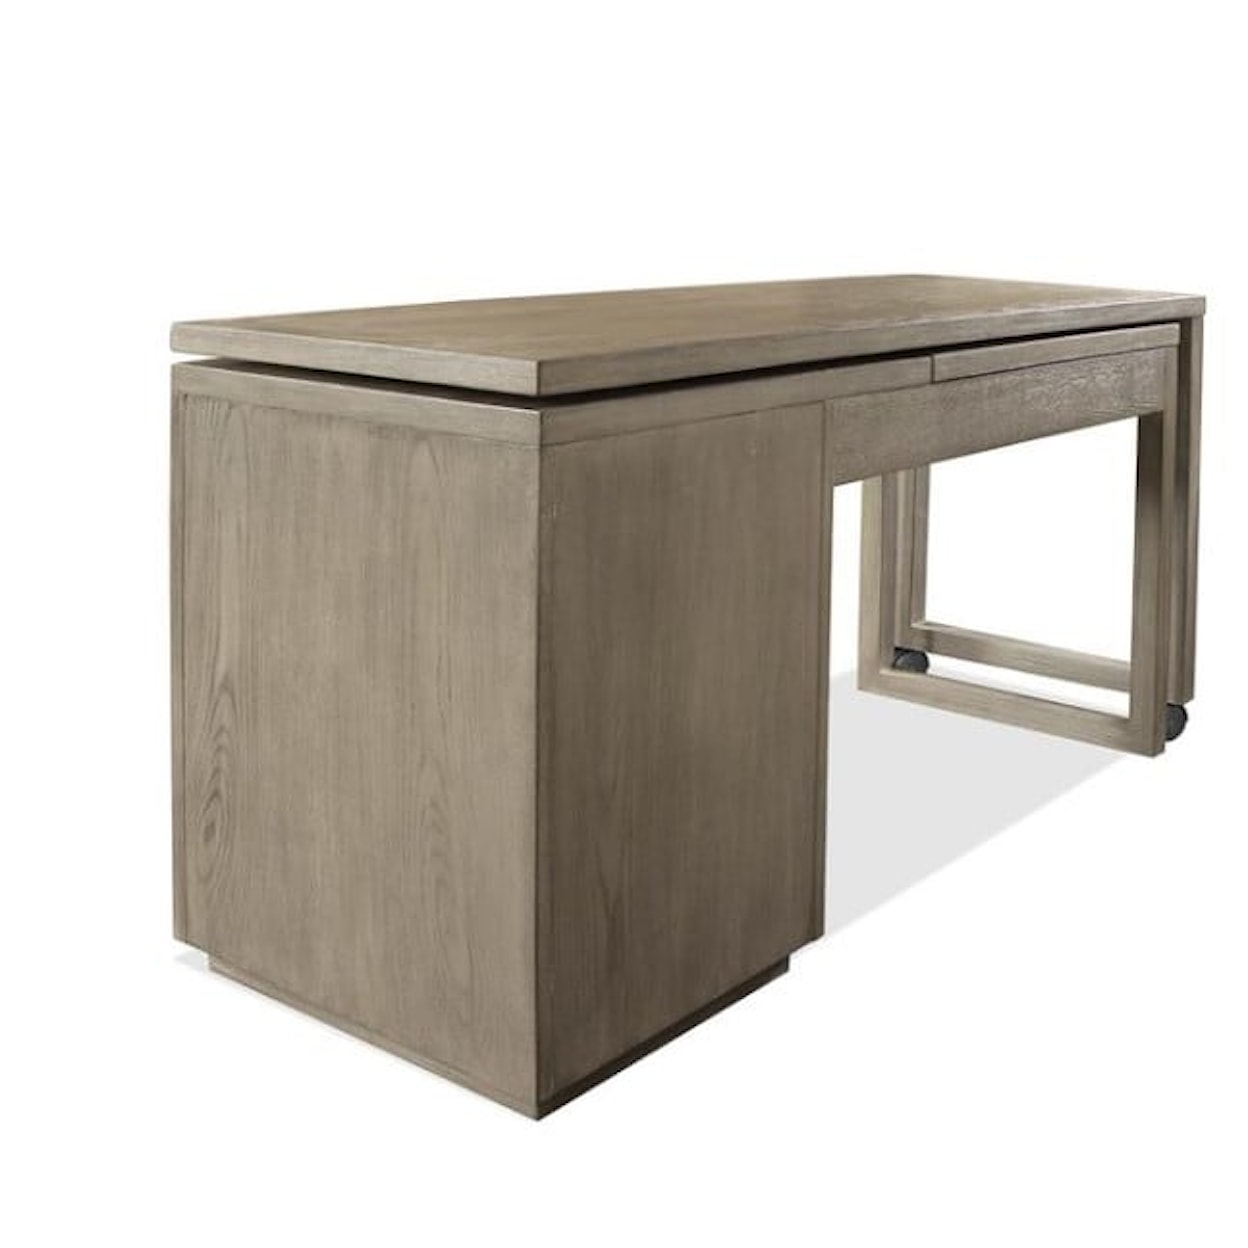 Riverside Furniture Prelude Swivel Lift-top L-desk